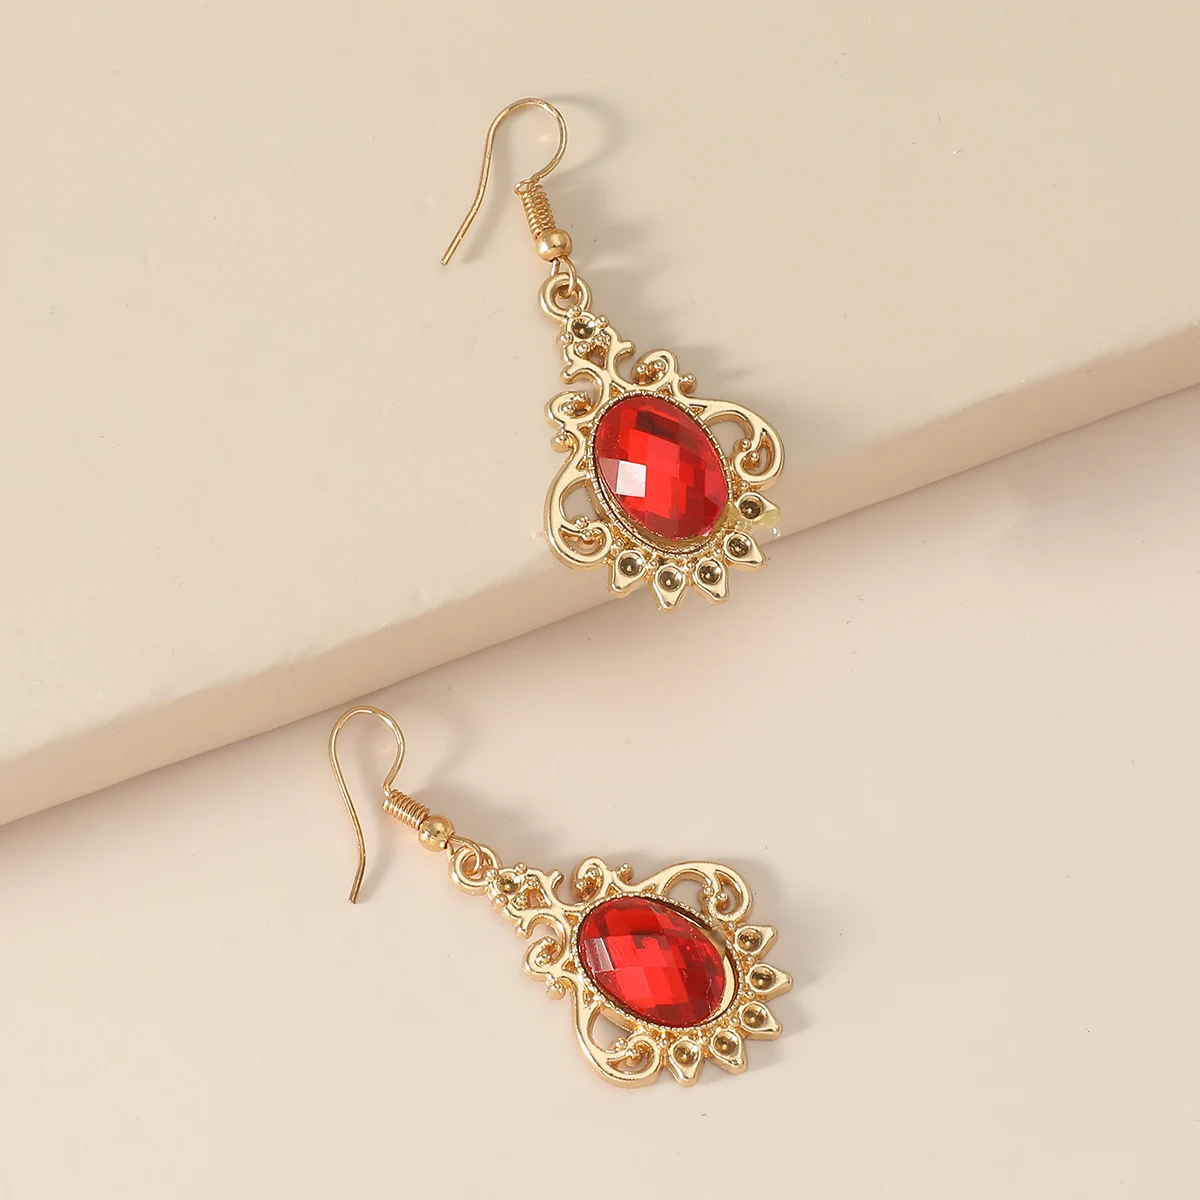 Rhinestone Earrings Vintage For Women Rose Gold Spiral Dangle Earring Red Rose Drop Earrings